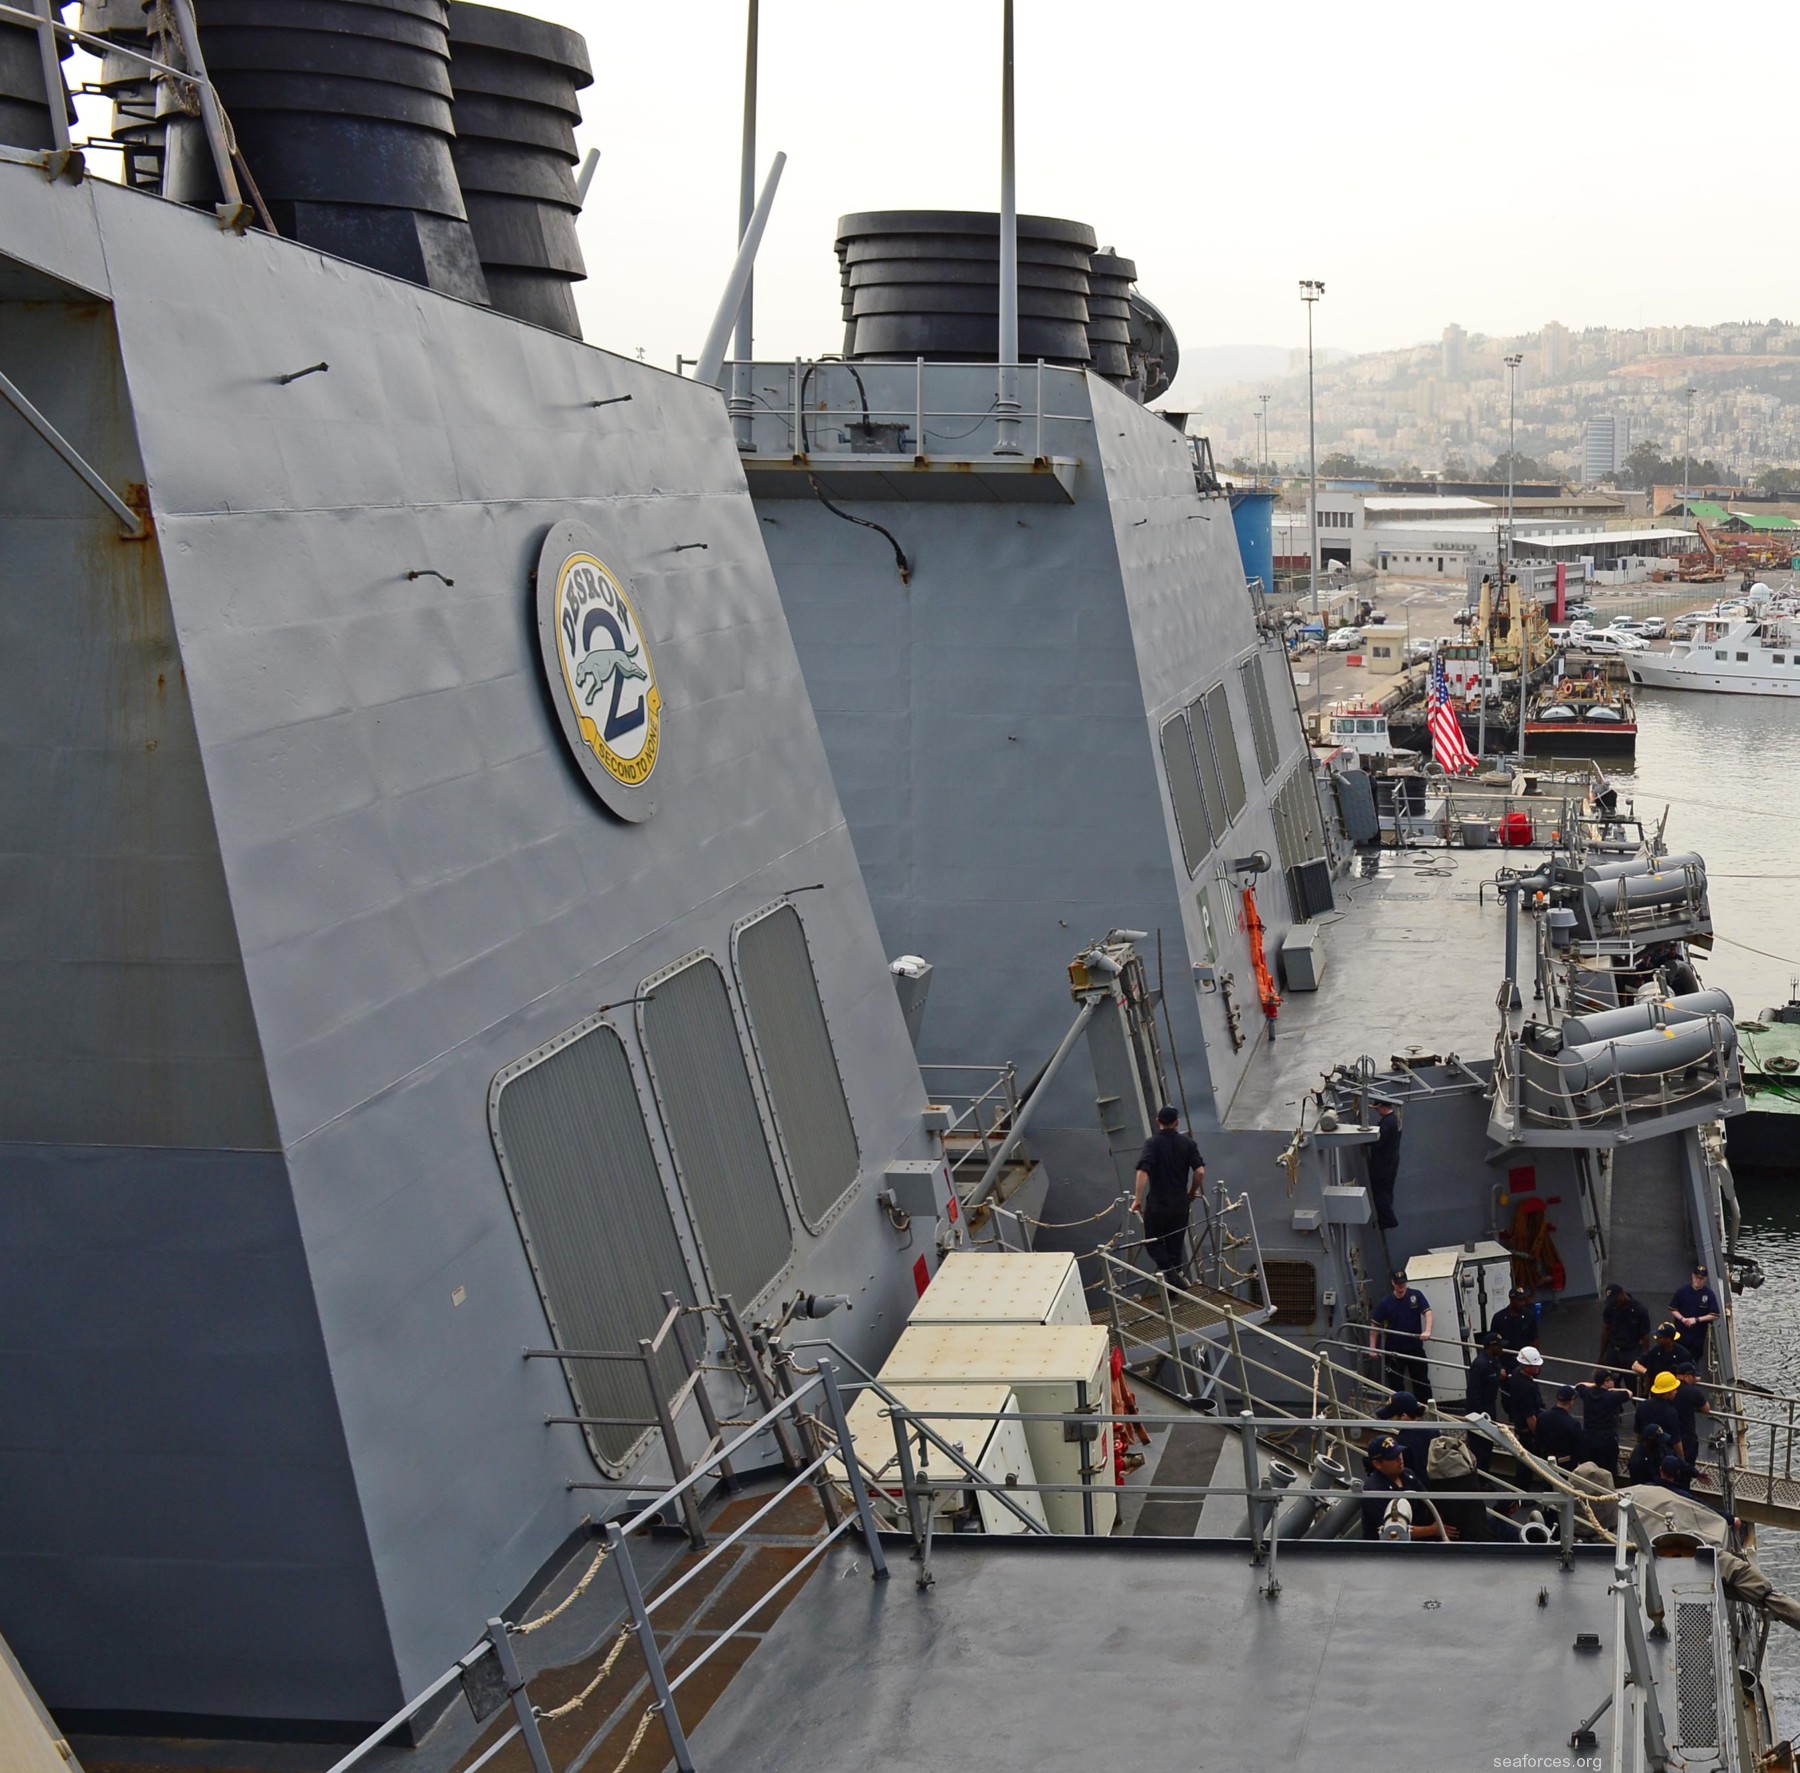 ddg-58 uss laboon guided missile destroyer us navy 32 haifa israel